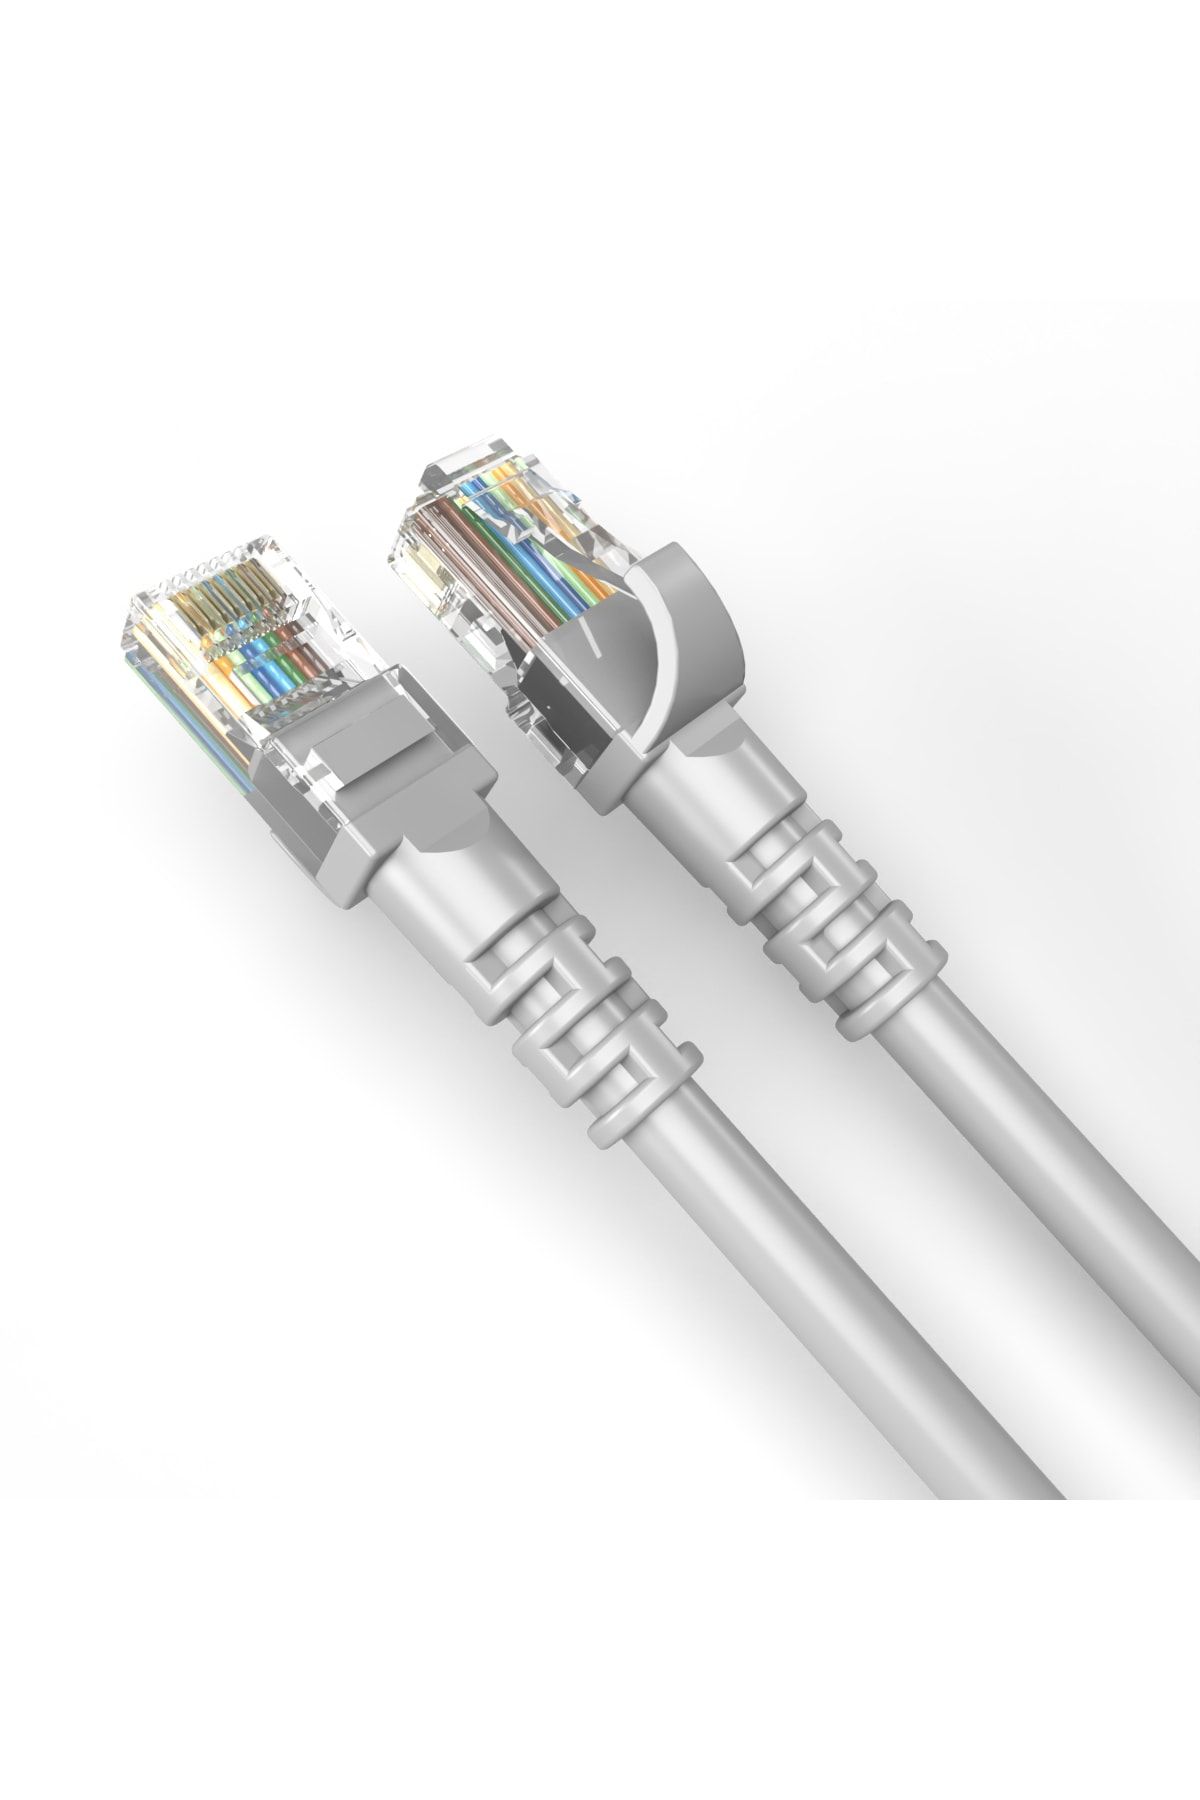 DERKAB 15 Metre Cat6 Network-Ağ-Ethernet Kablosu